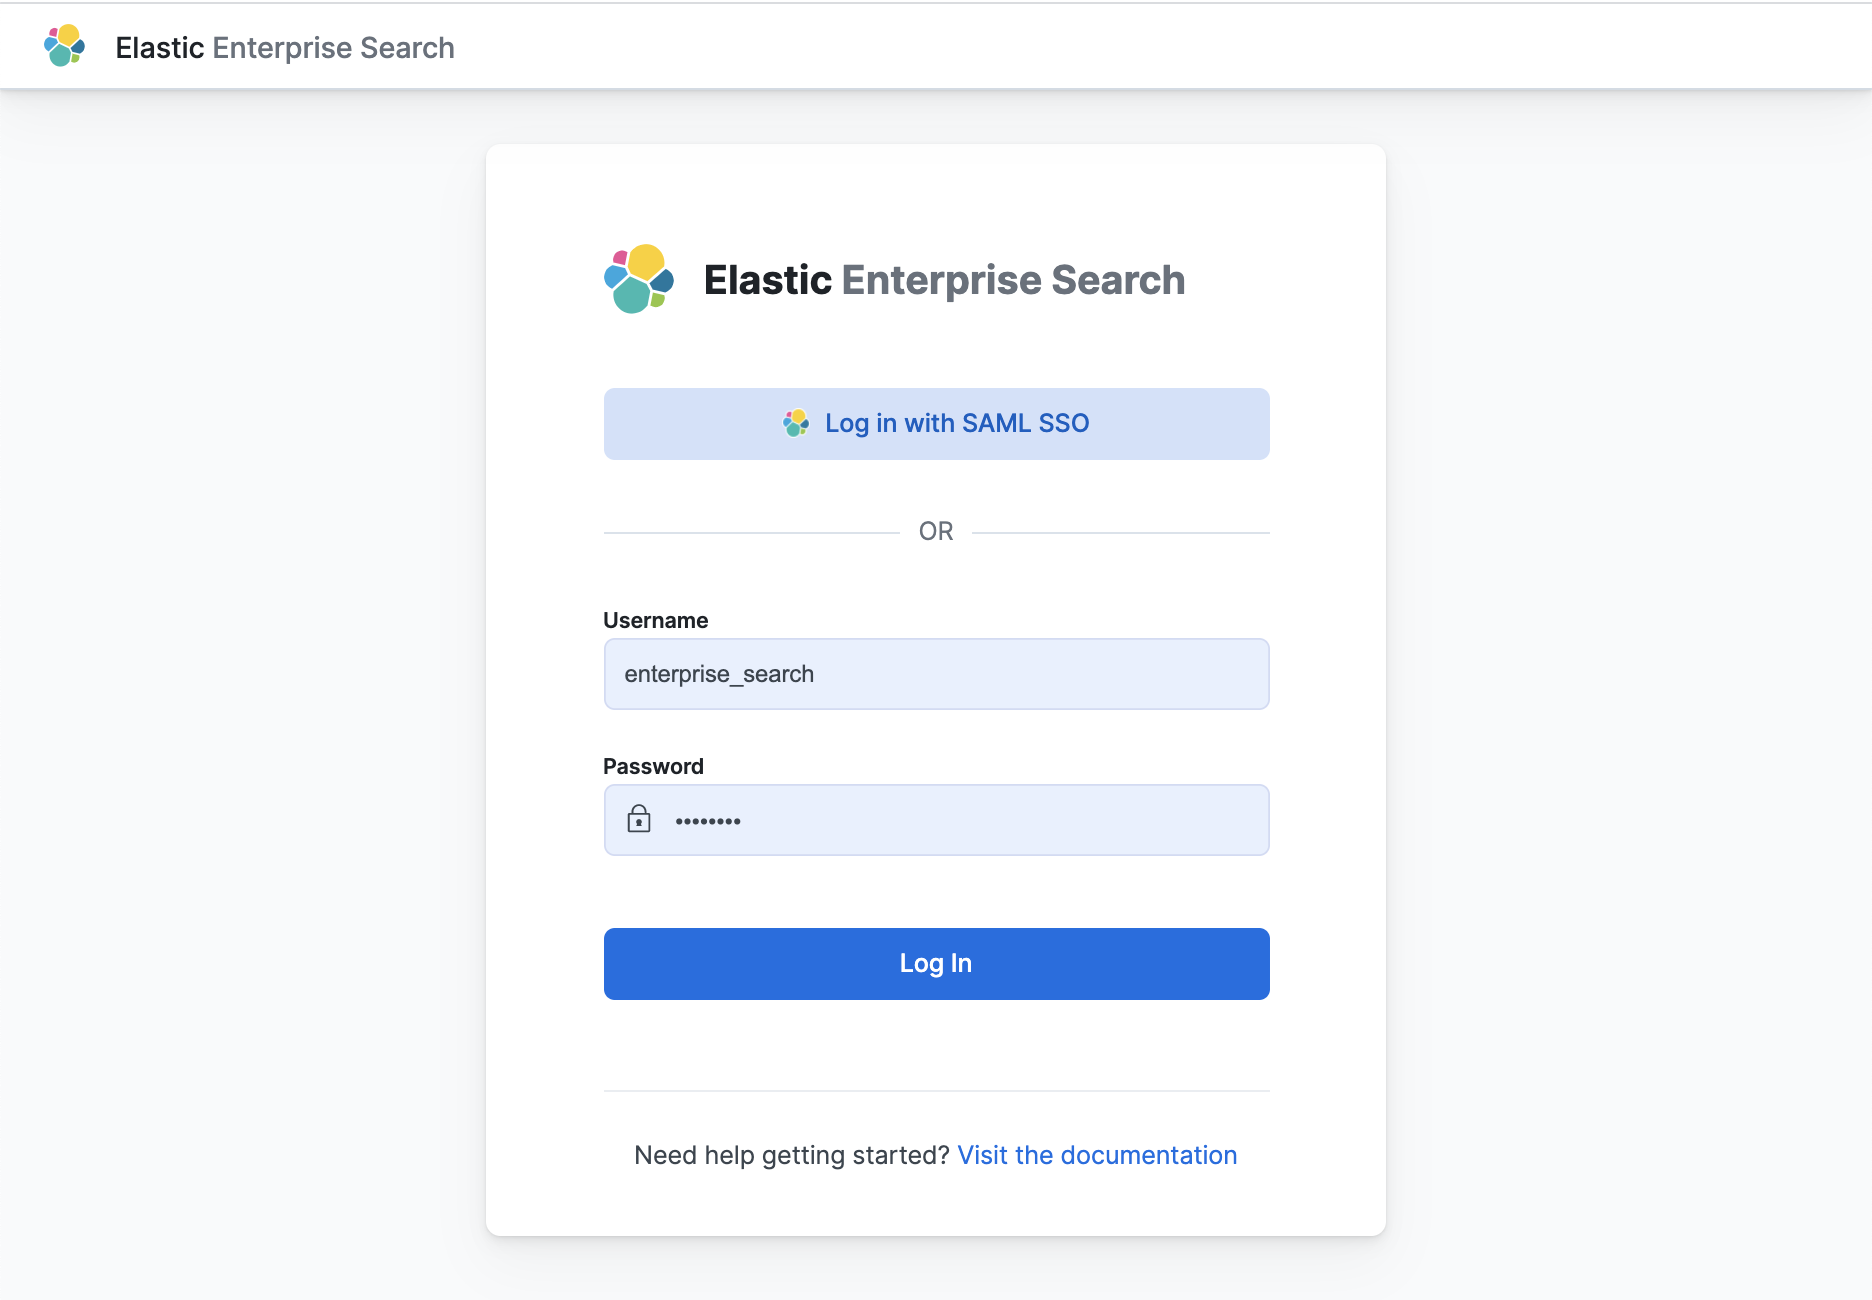 Enterprise Search with SAML login